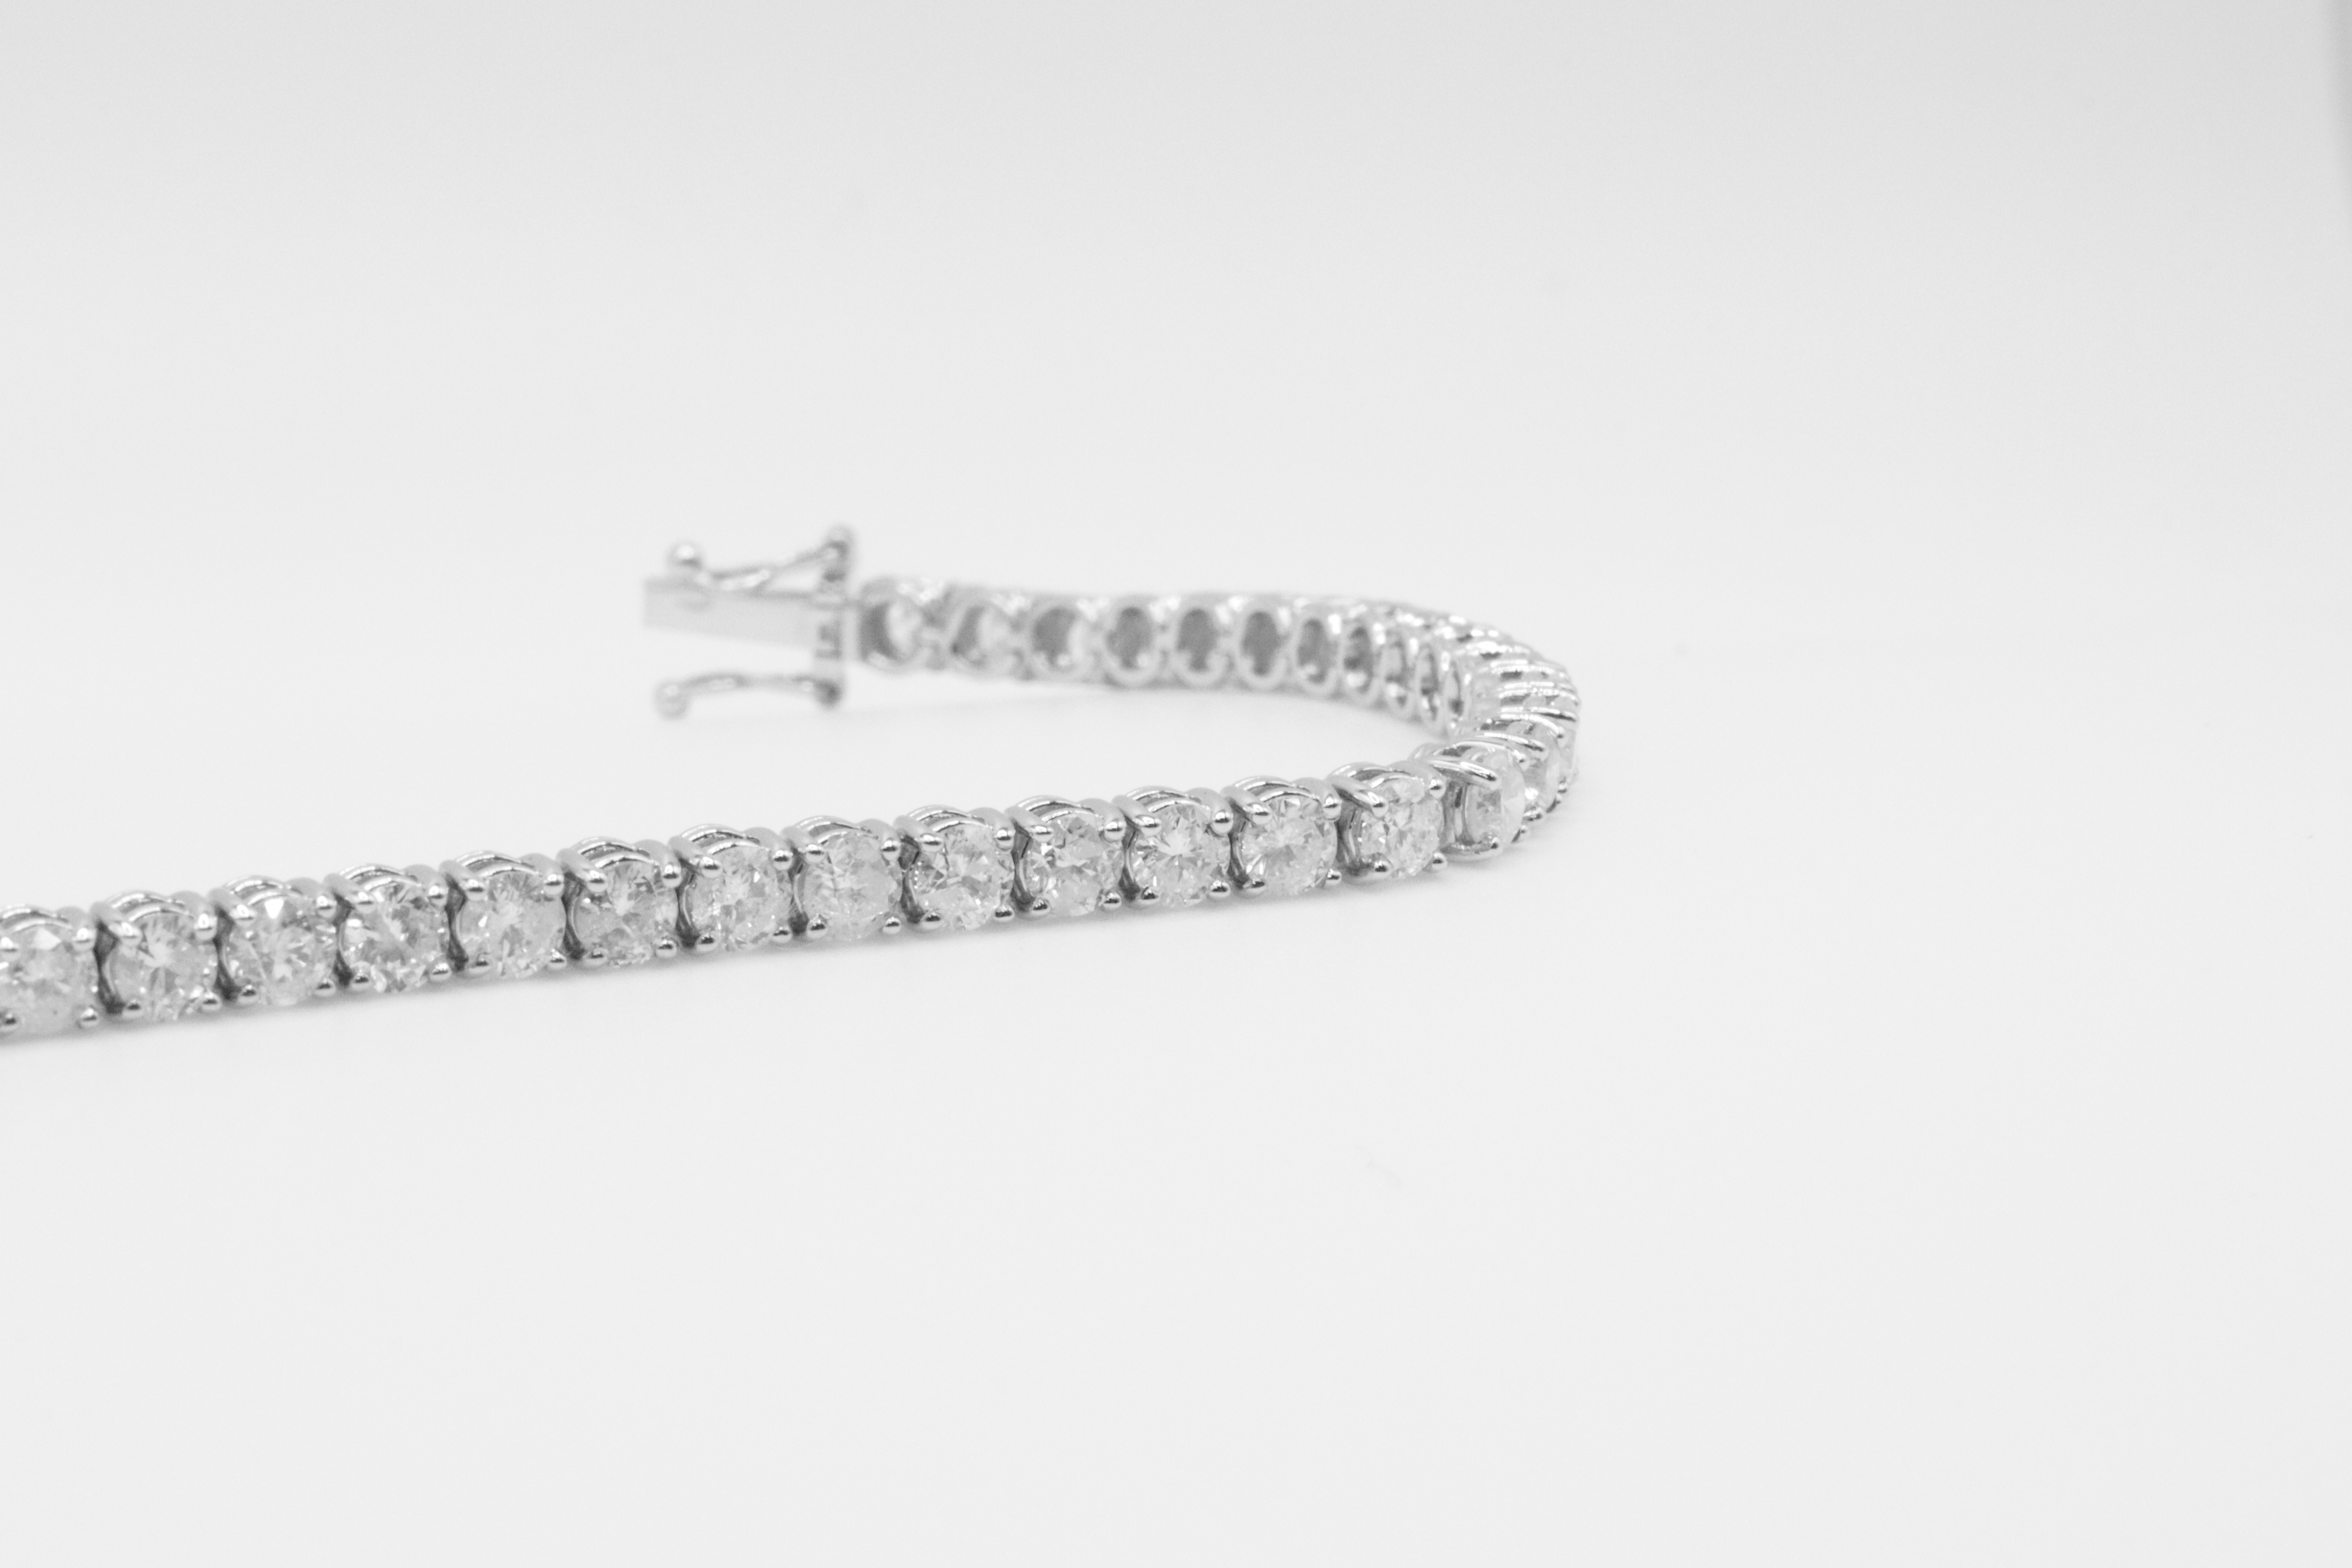 ** ON SALE **9.0 Carat 18ct White Gold Tennis Bracelet set with Round Brilliant Cut Natural Diamonds - Image 16 of 17